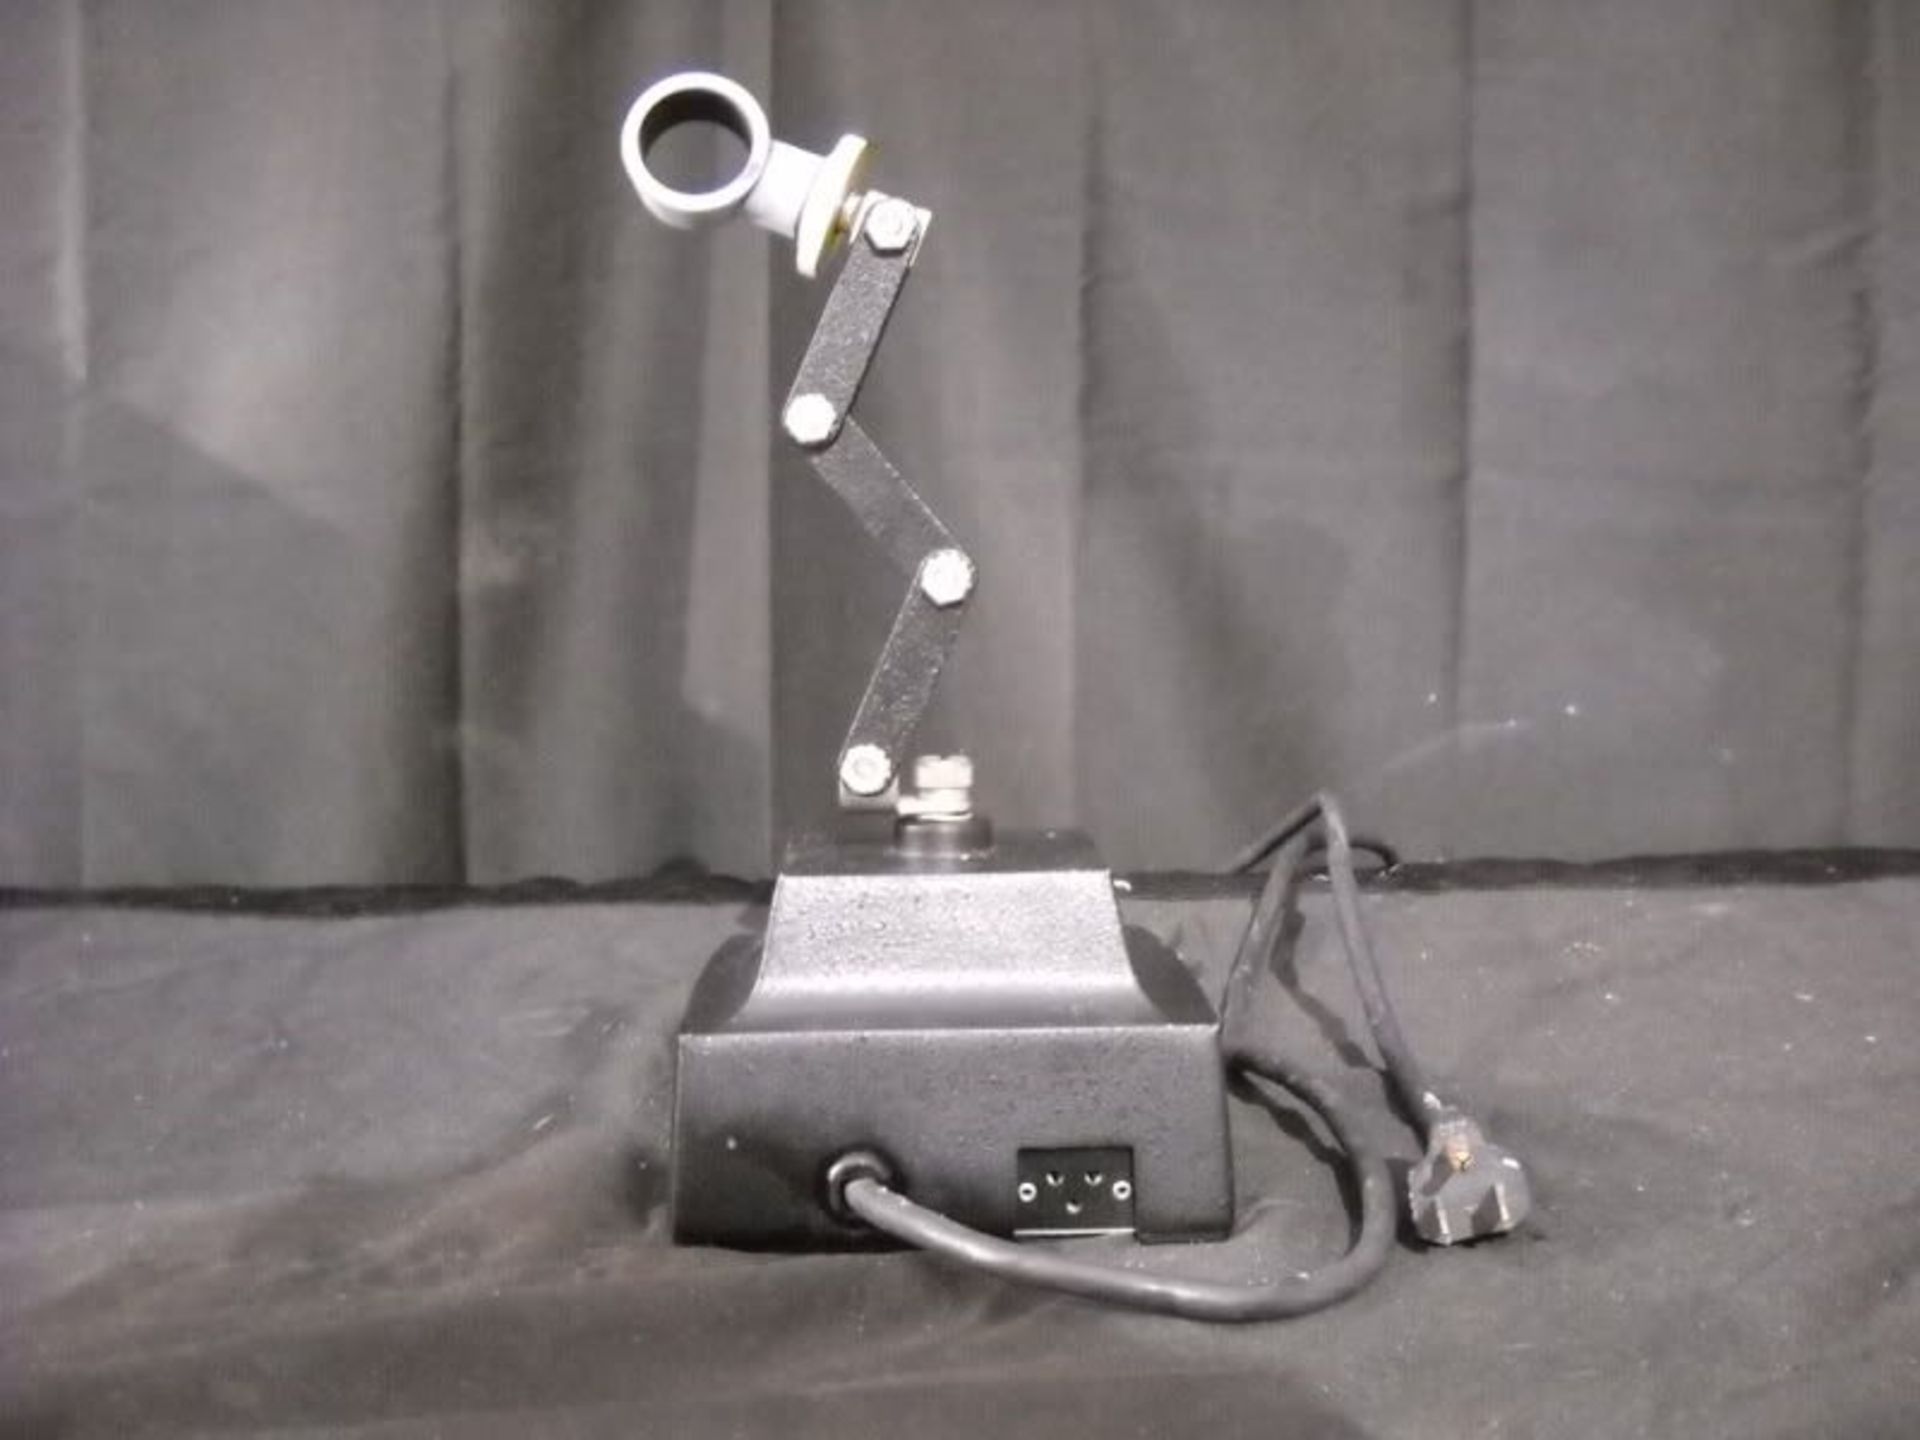 Bausch & Lomb Microscope Illuminator Transformer Cat # 31-35-28, Qty 1, 221117343151 - Image 3 of 5